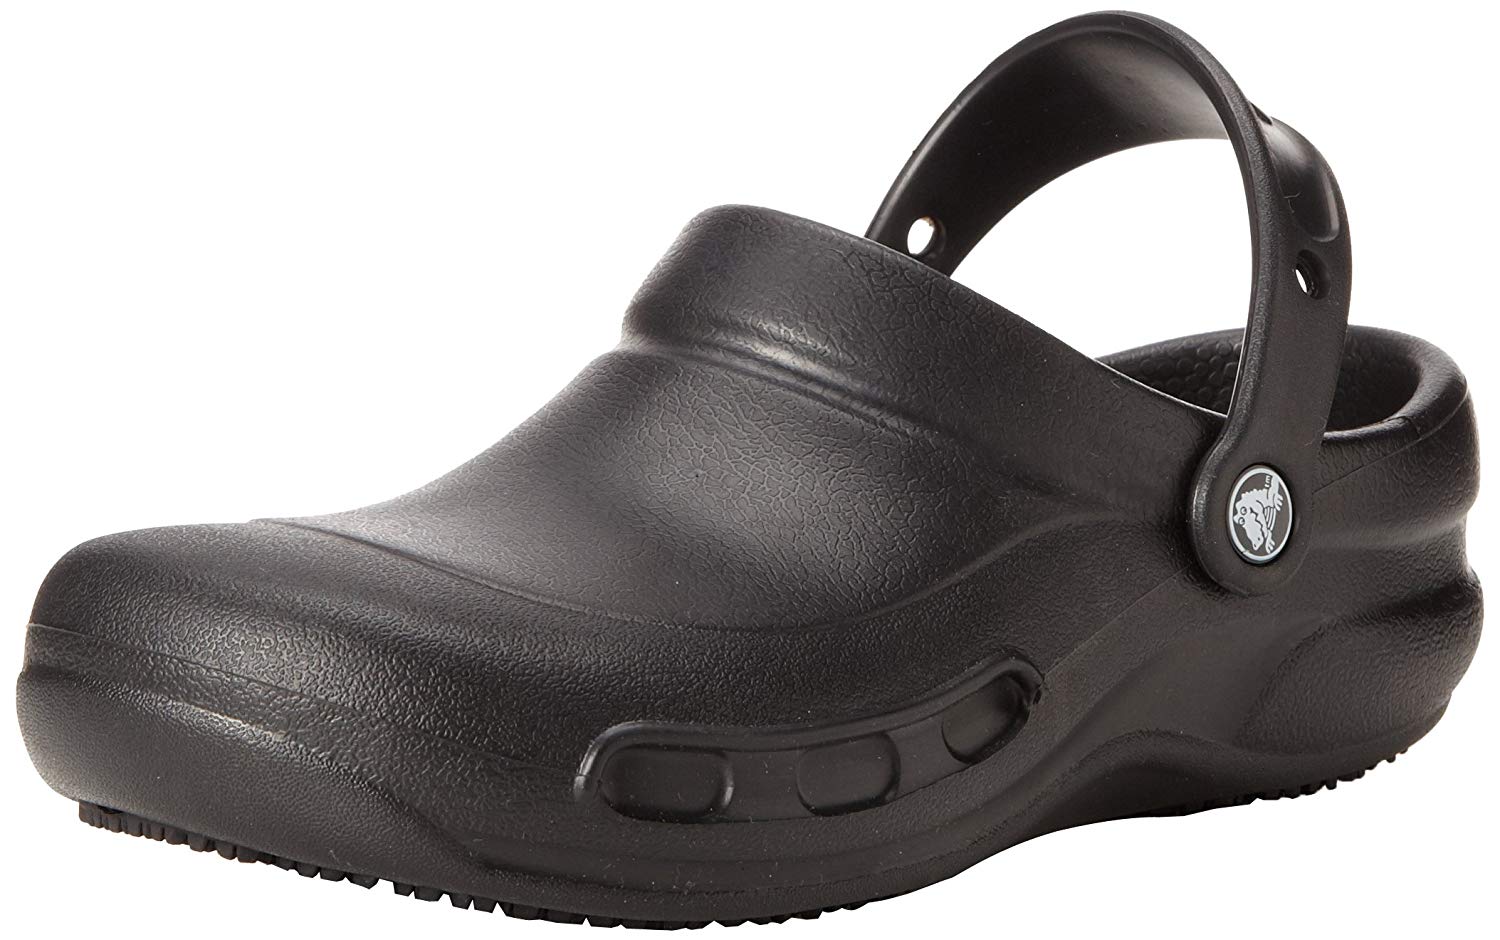 Crocs Womens Bistro Clog Closed Toe Ankle Strap Clogs, Black, Size 14.0